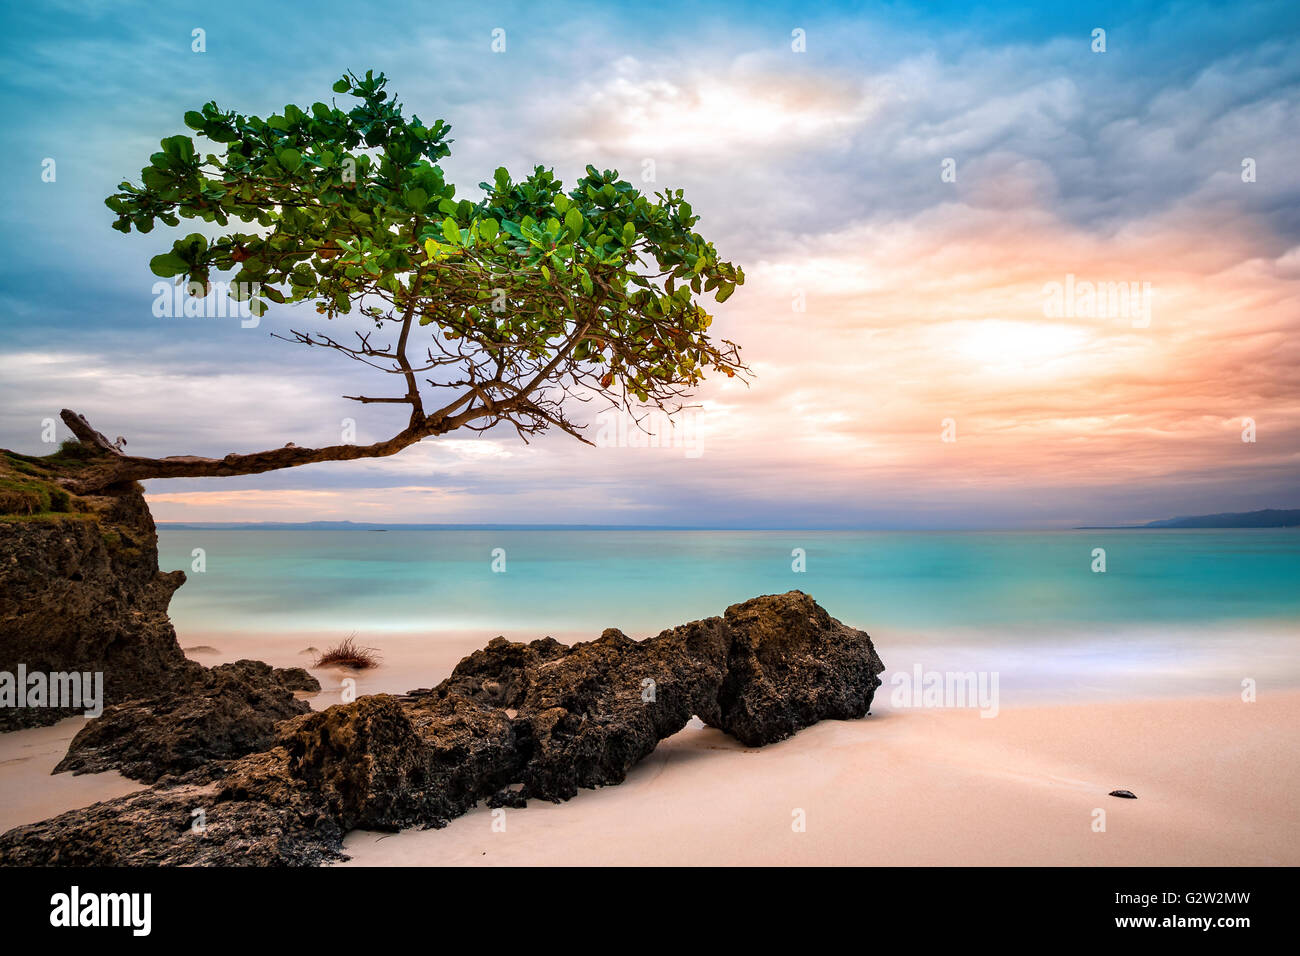 Exotic seascape with sea grape tree Stock Photo